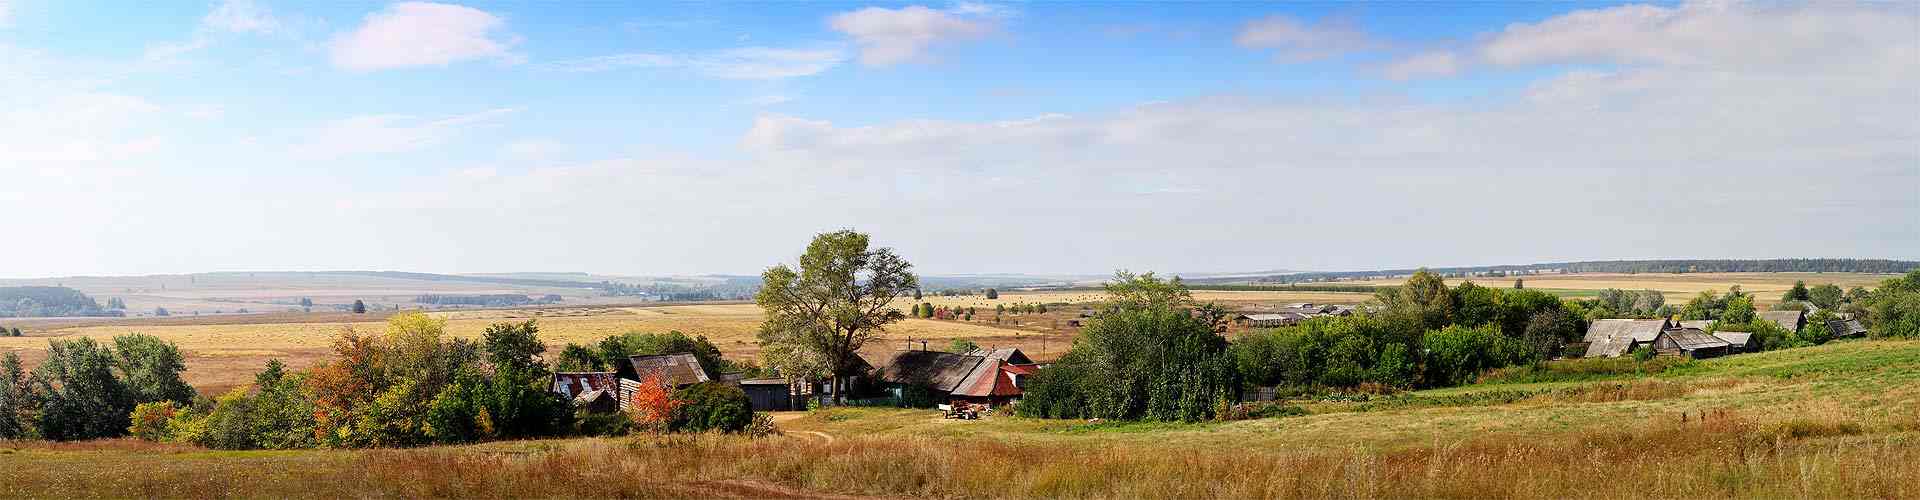 Casas rurales en Vergel